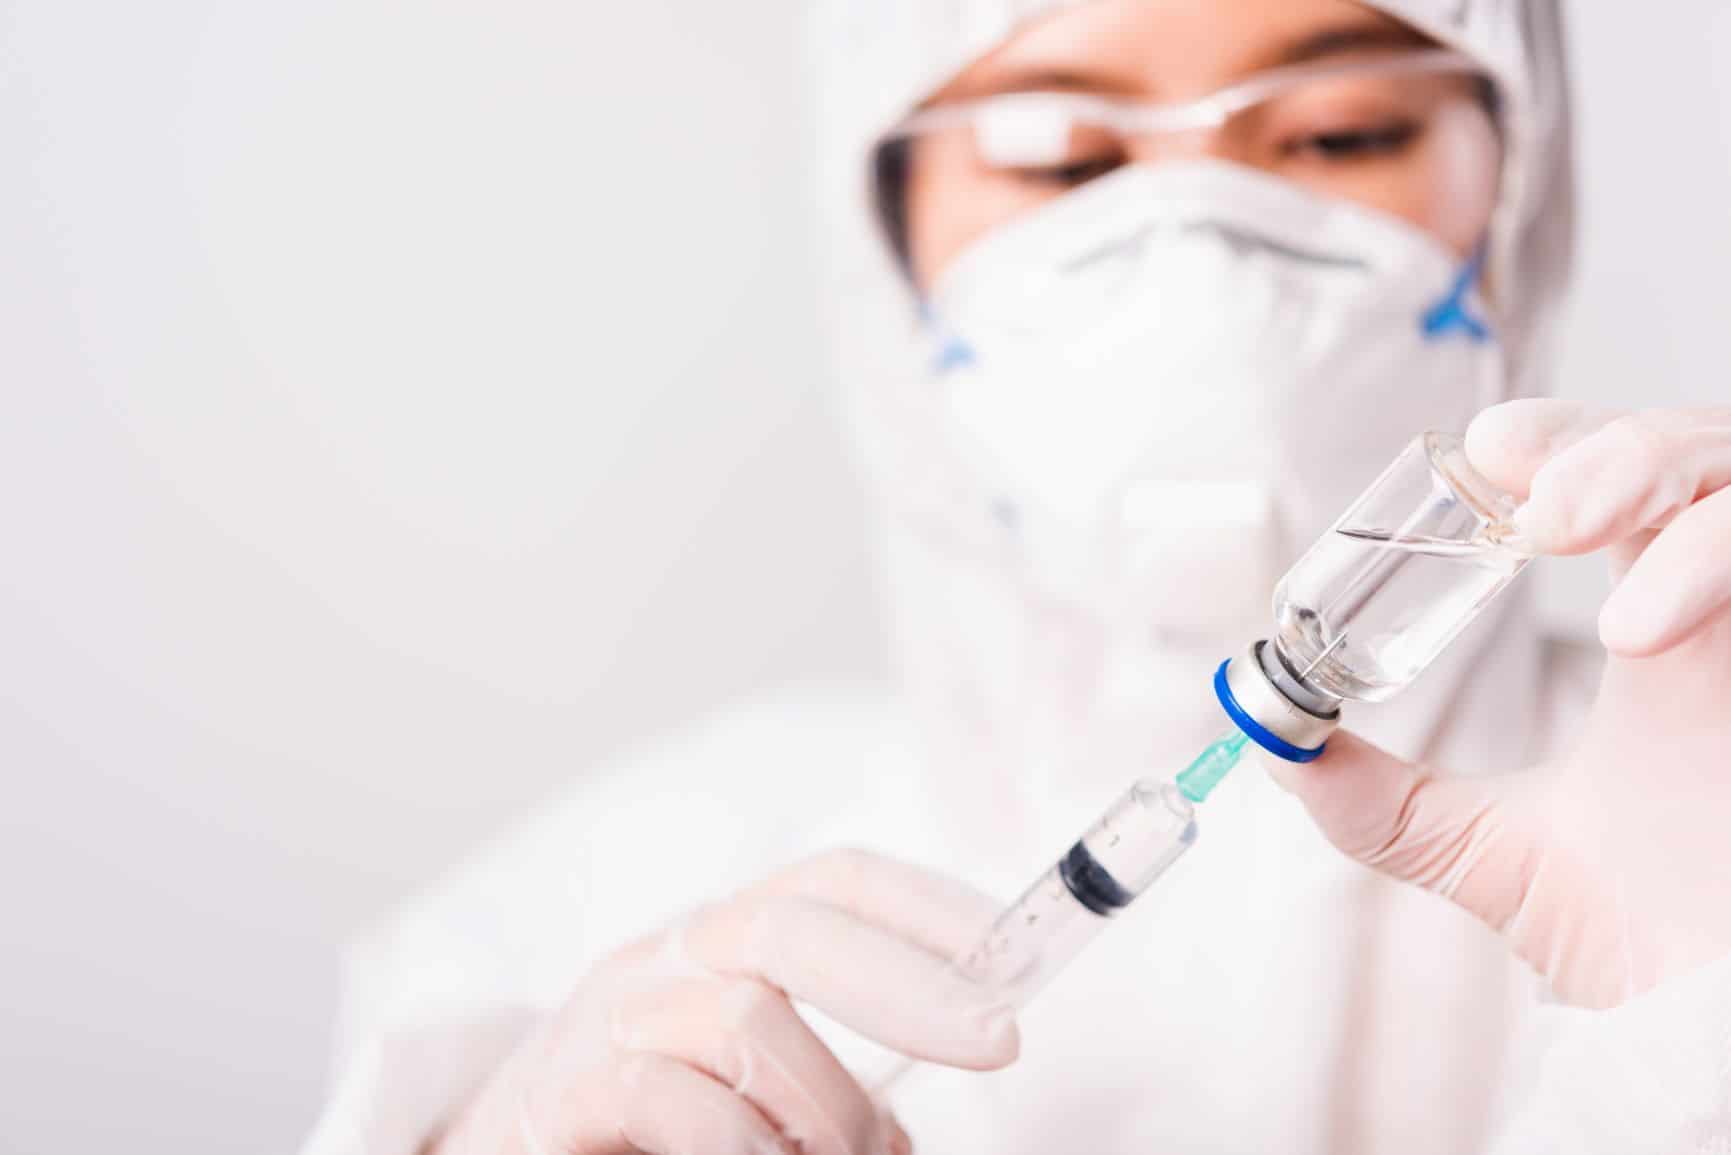 Apakah Vaksin Mampu Menyelesaikan Semua Masalah Pandemi COVID-19?